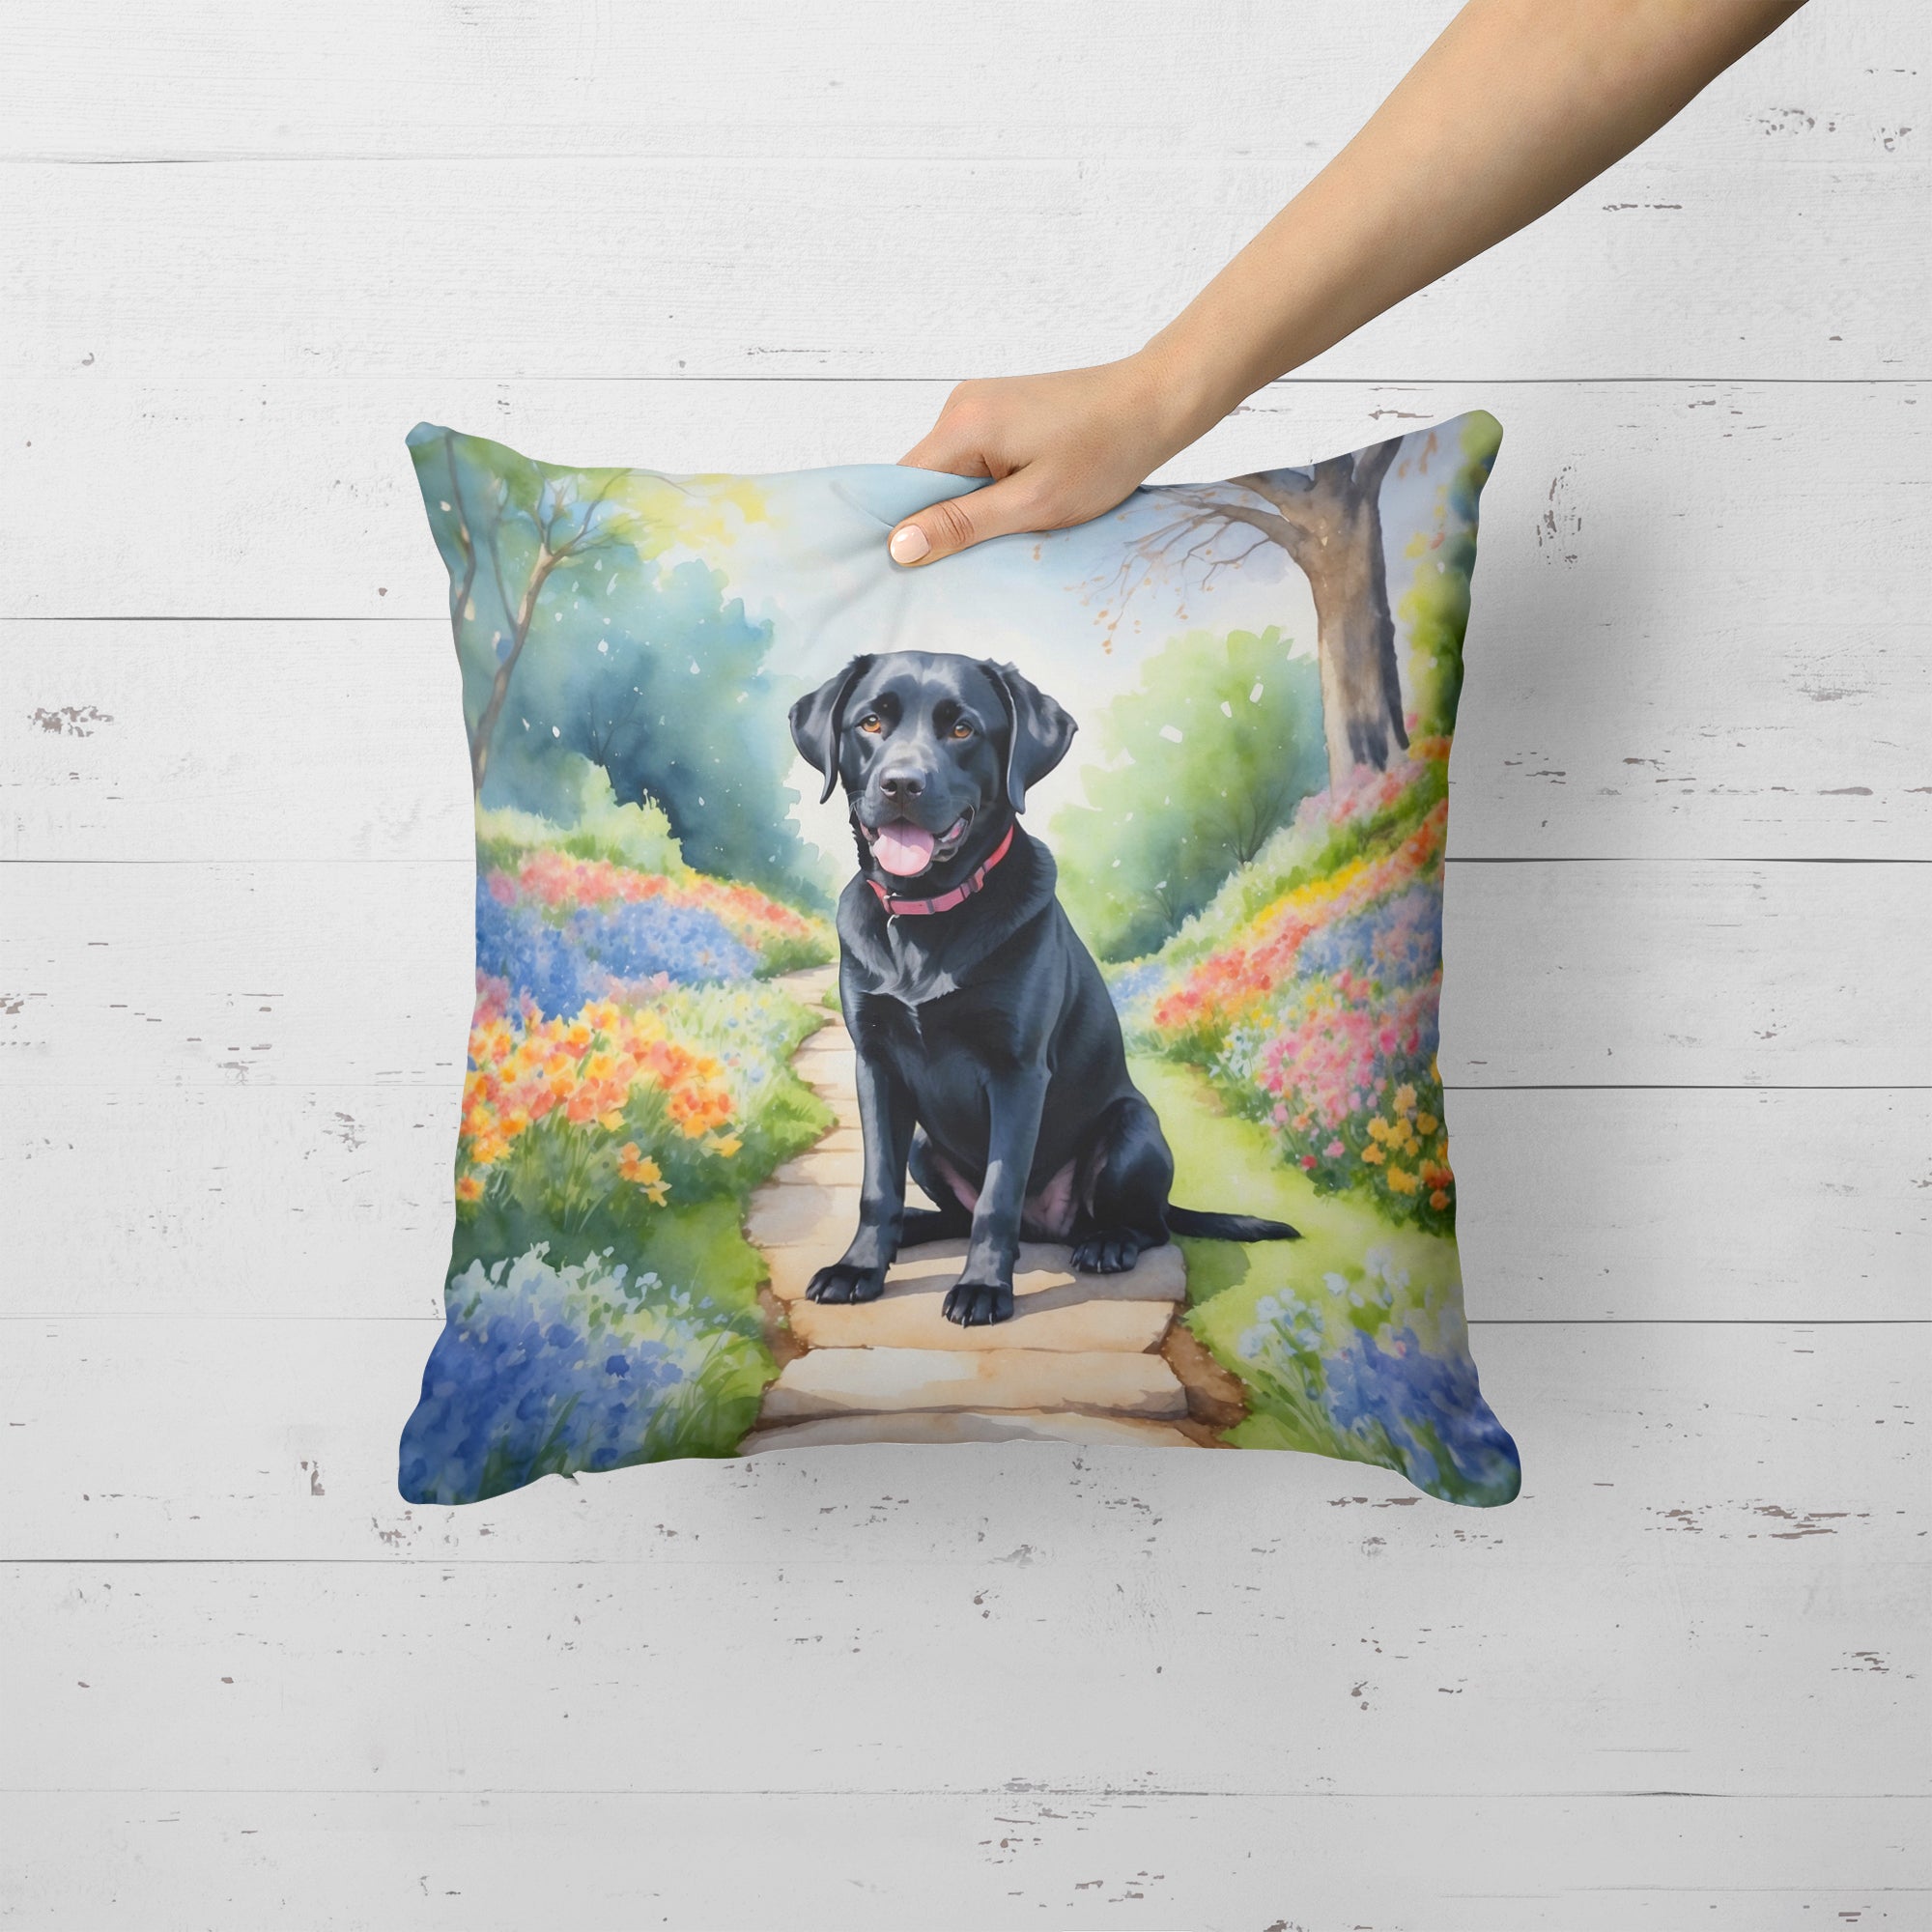 Buy this Labrador Retriever Spring Path Throw Pillow